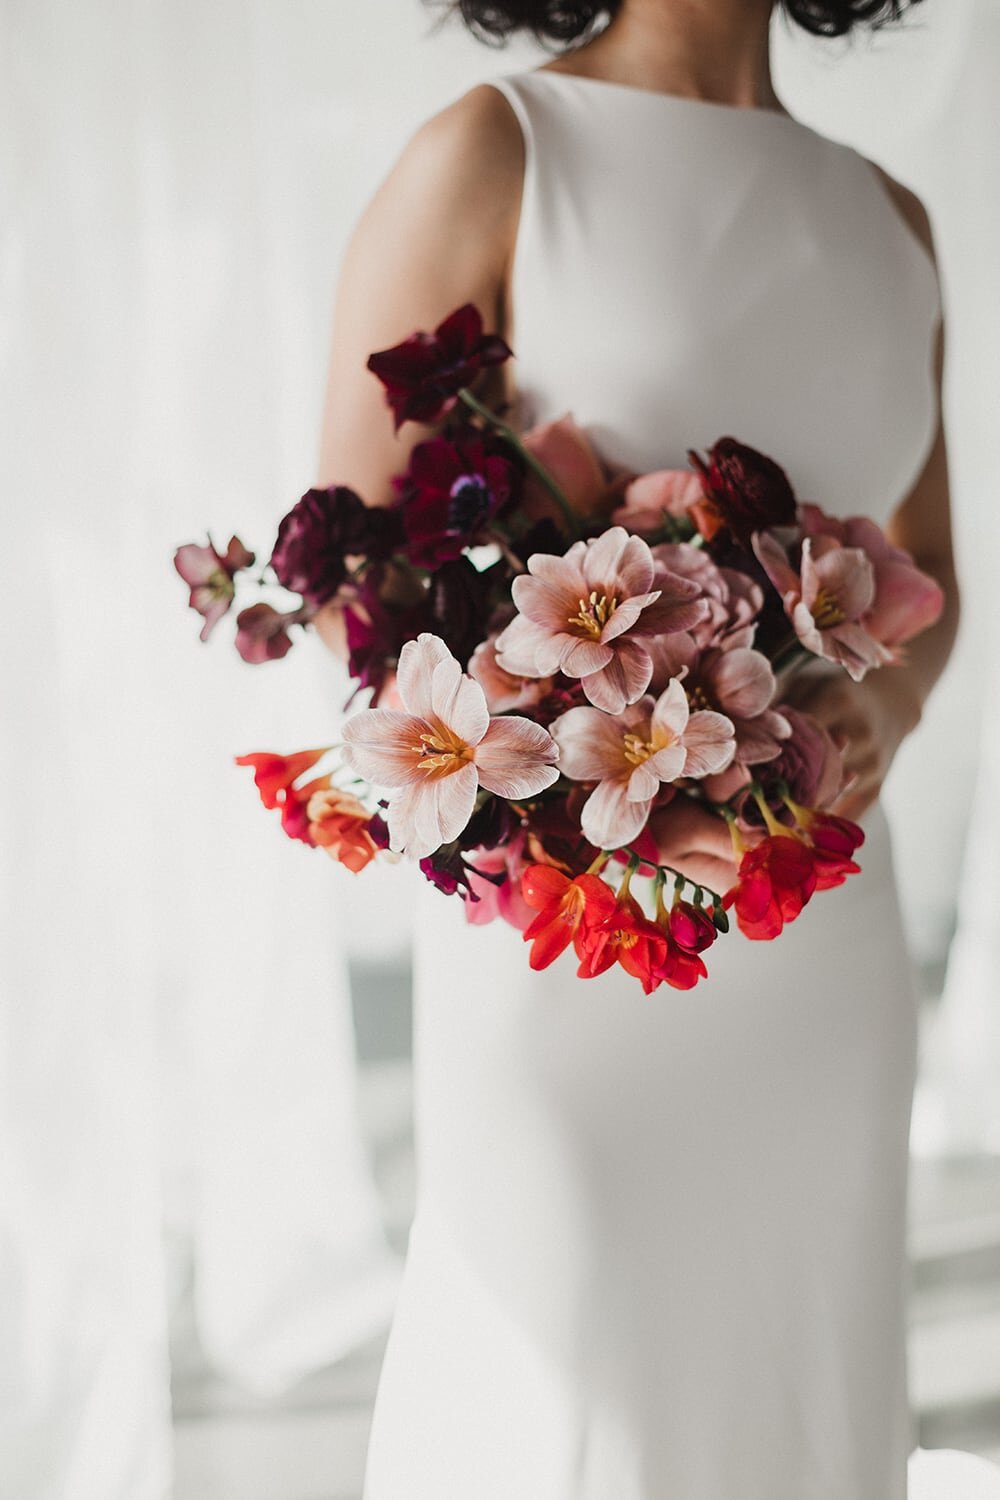 Sustainable Floristry providing bridal bouquet